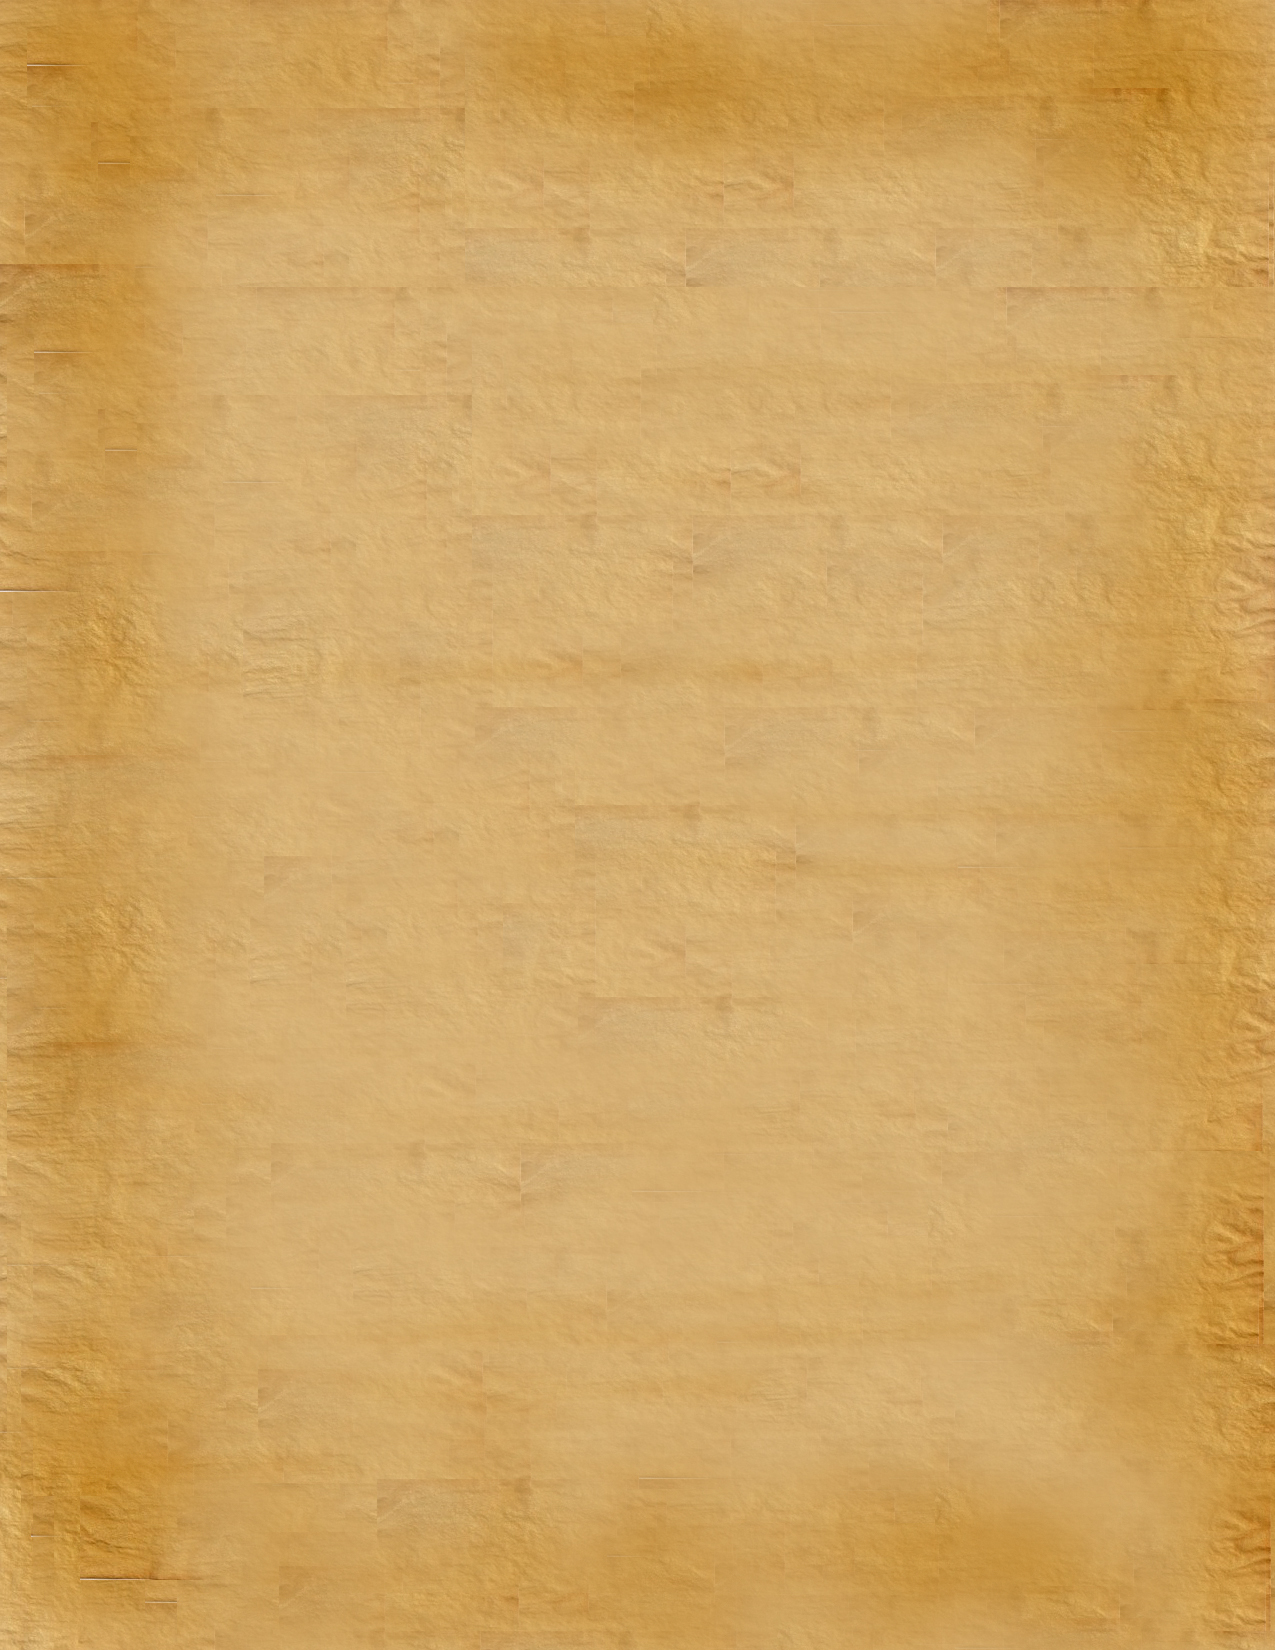 Parchment Paper Texture By Sinnedaria On Deviantart HD Wallpapers Download Free Images Wallpaper [wallpaper981.blogspot.com]